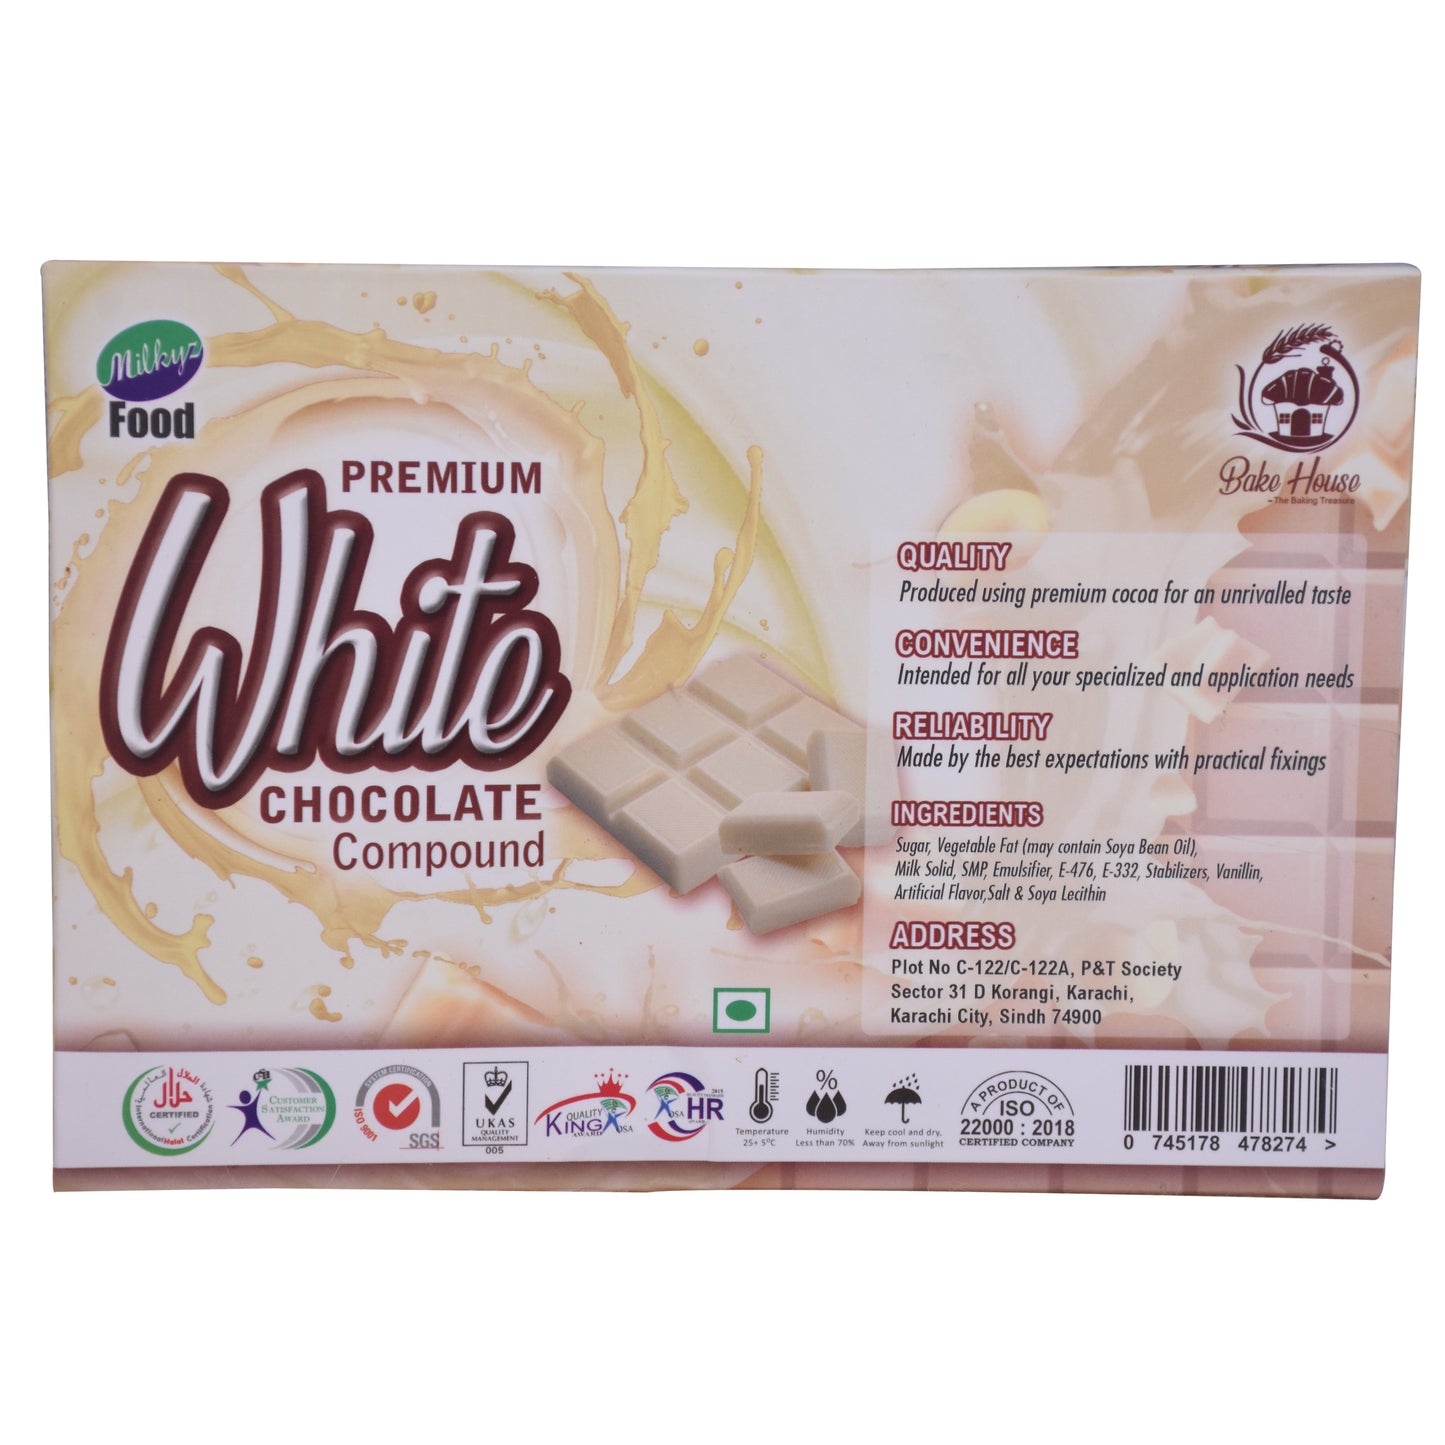 Milkyz Food Premium White Chocolate Compound 500g Pack